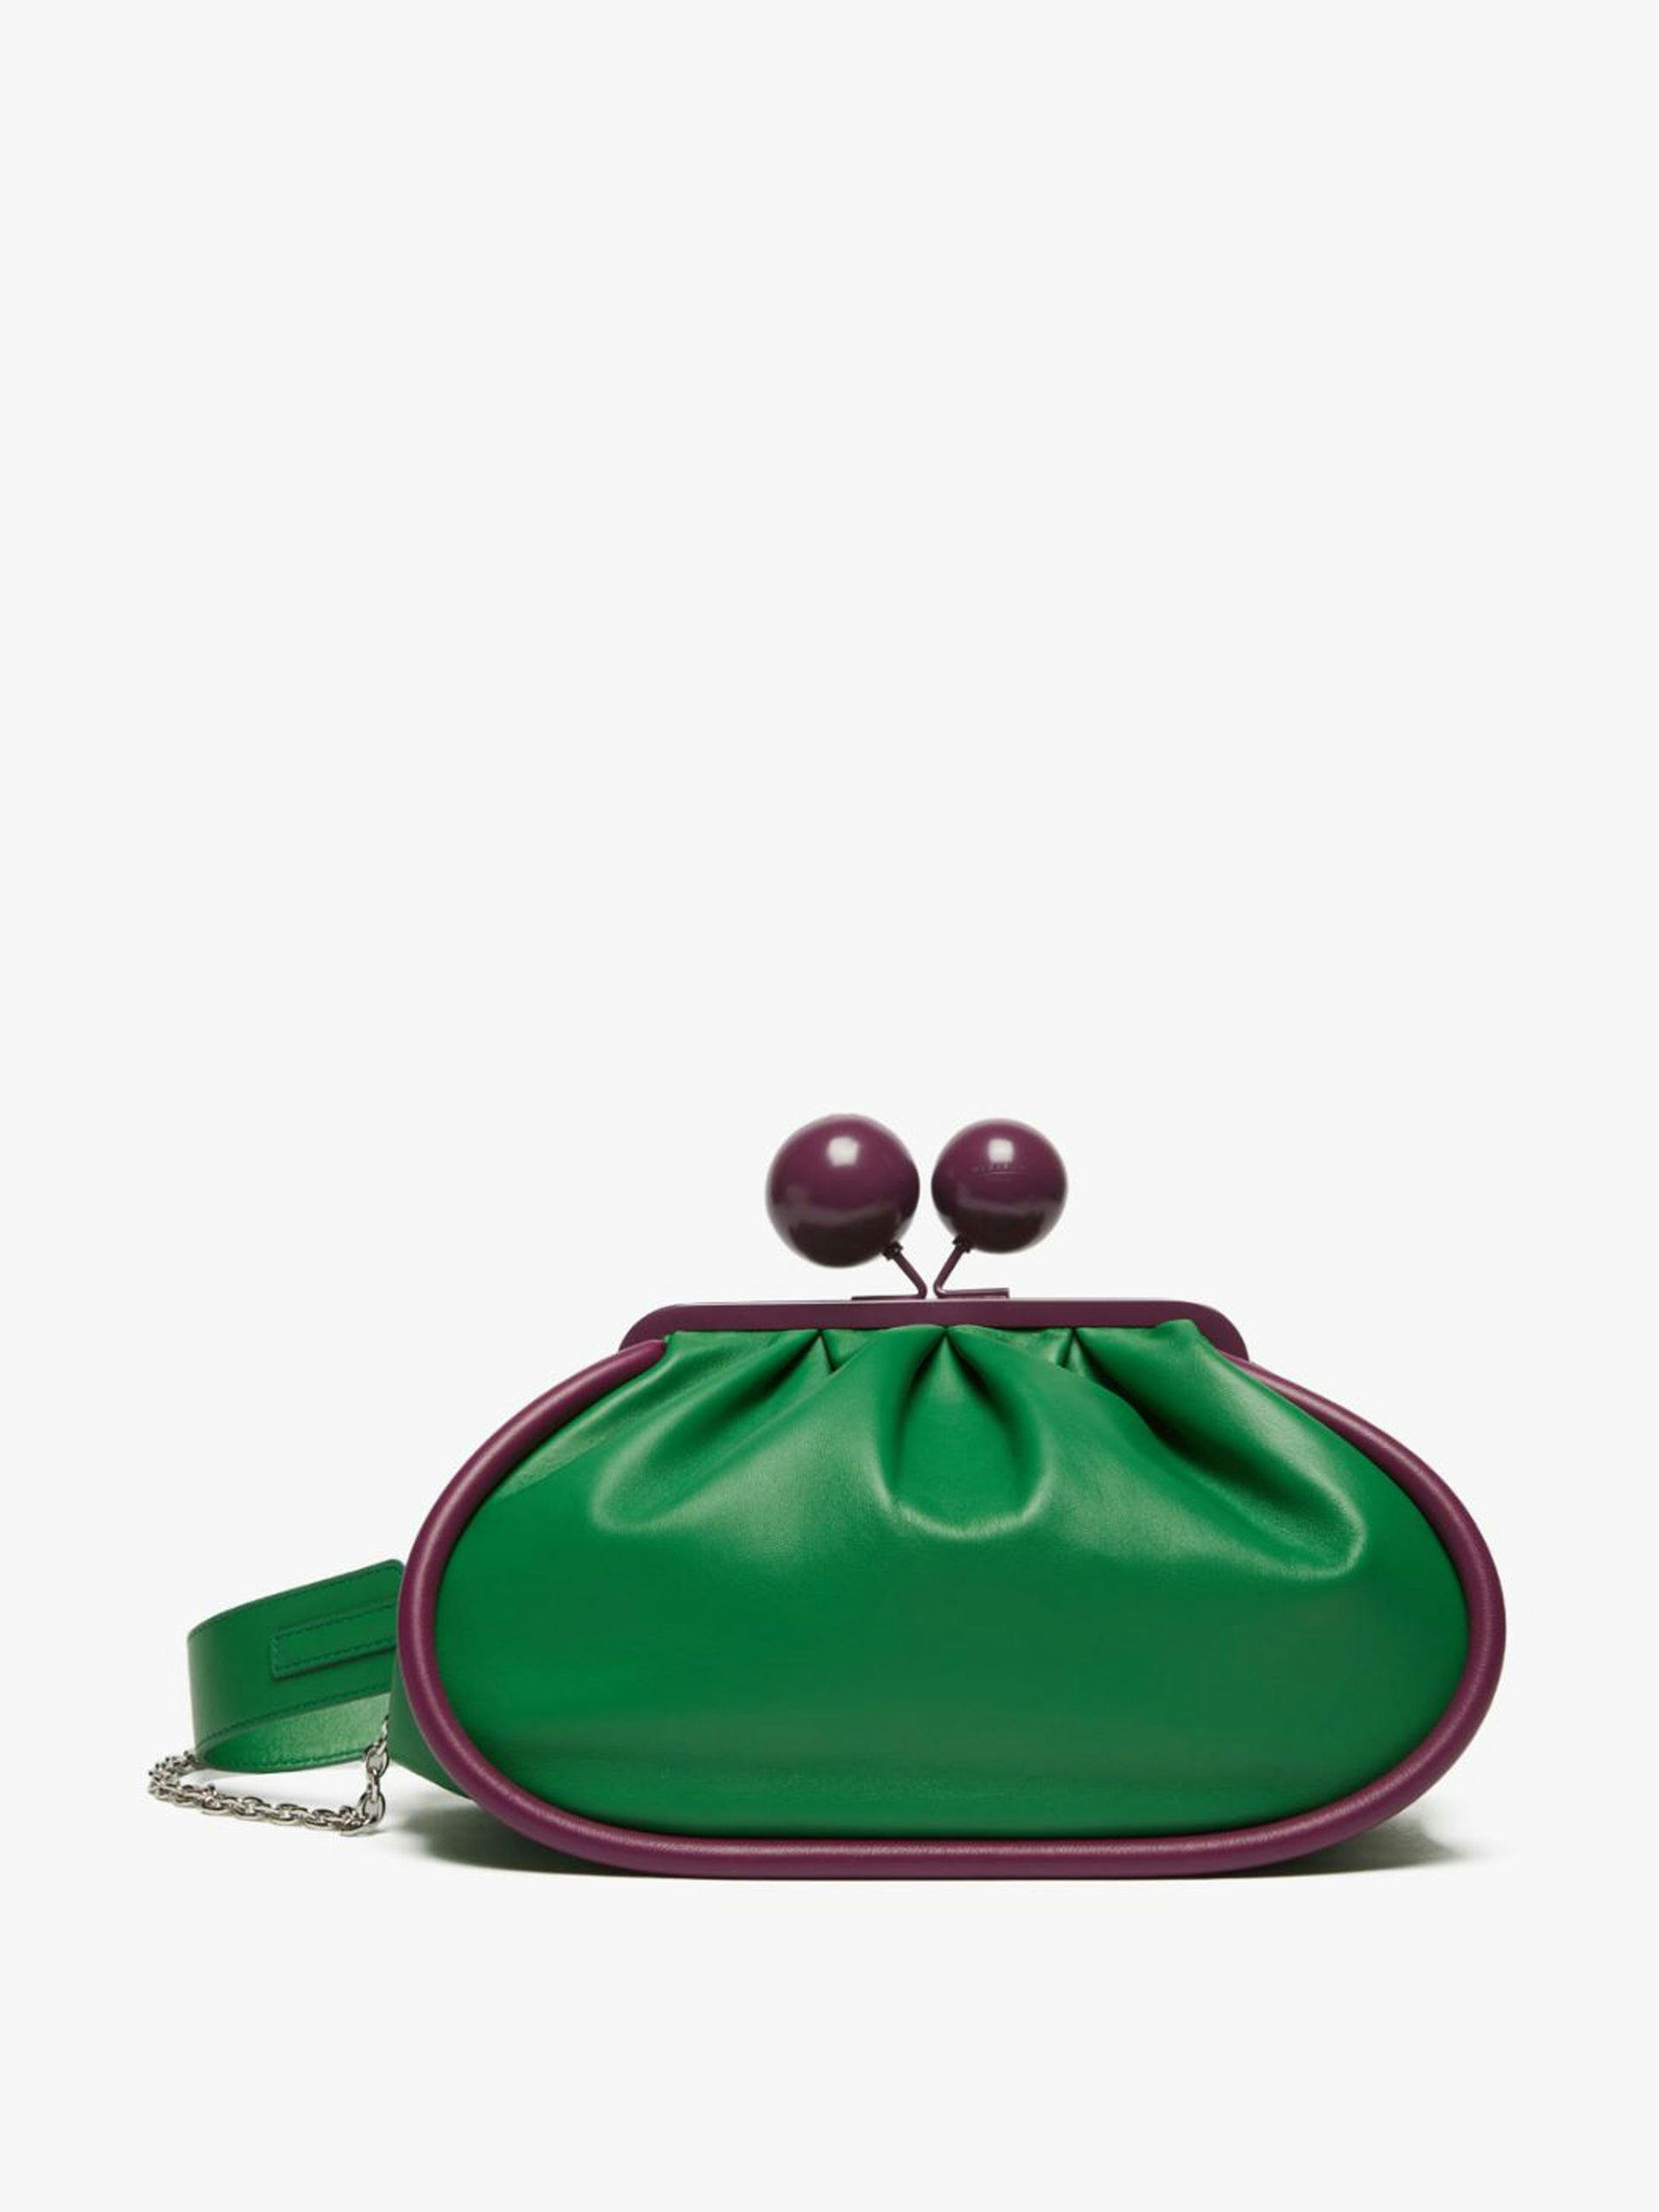 Medium Pasticcino Bag in nappa leather in green